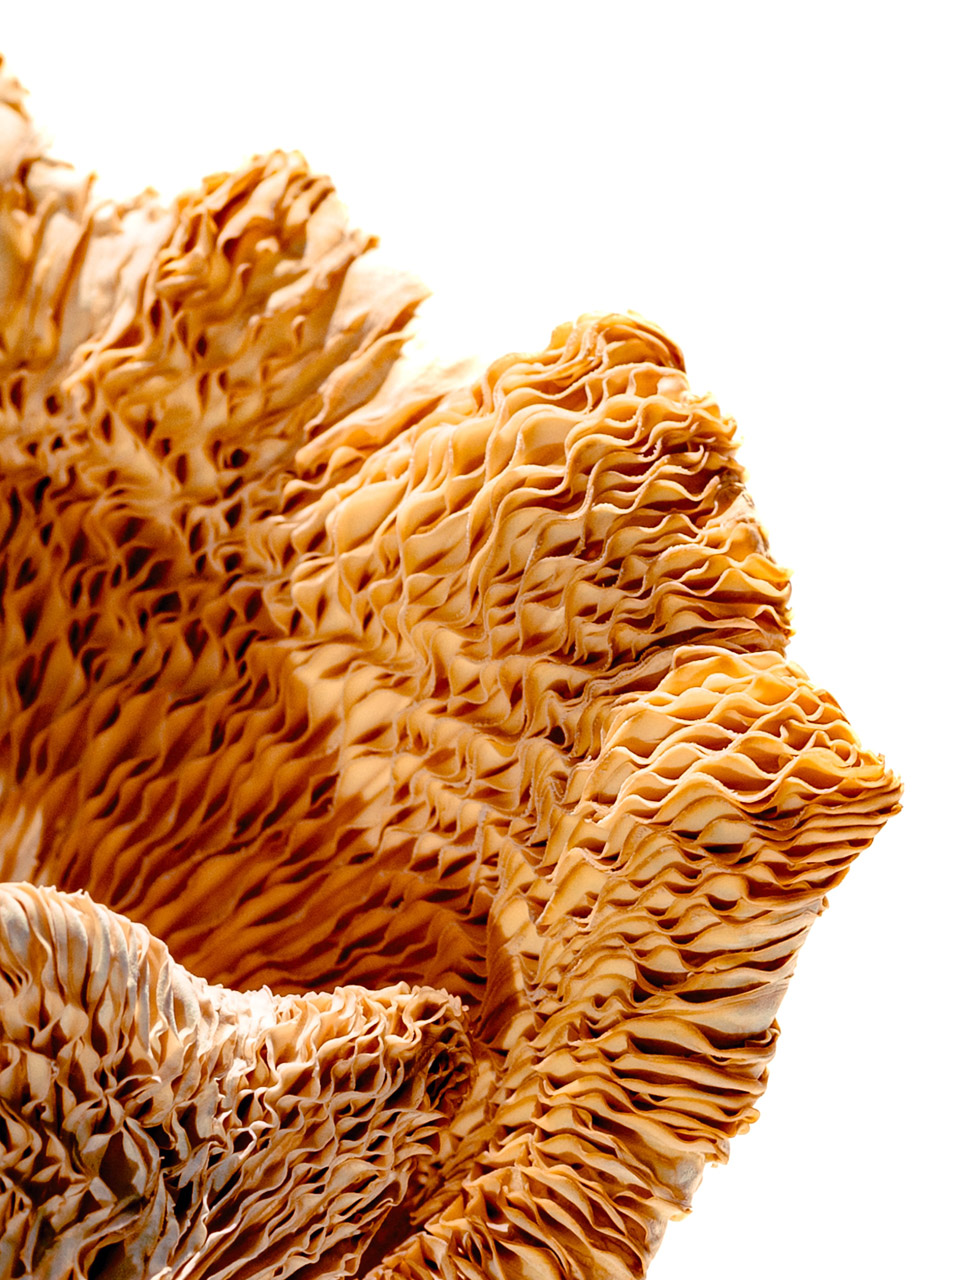 Oyster mushroom close up eat five star